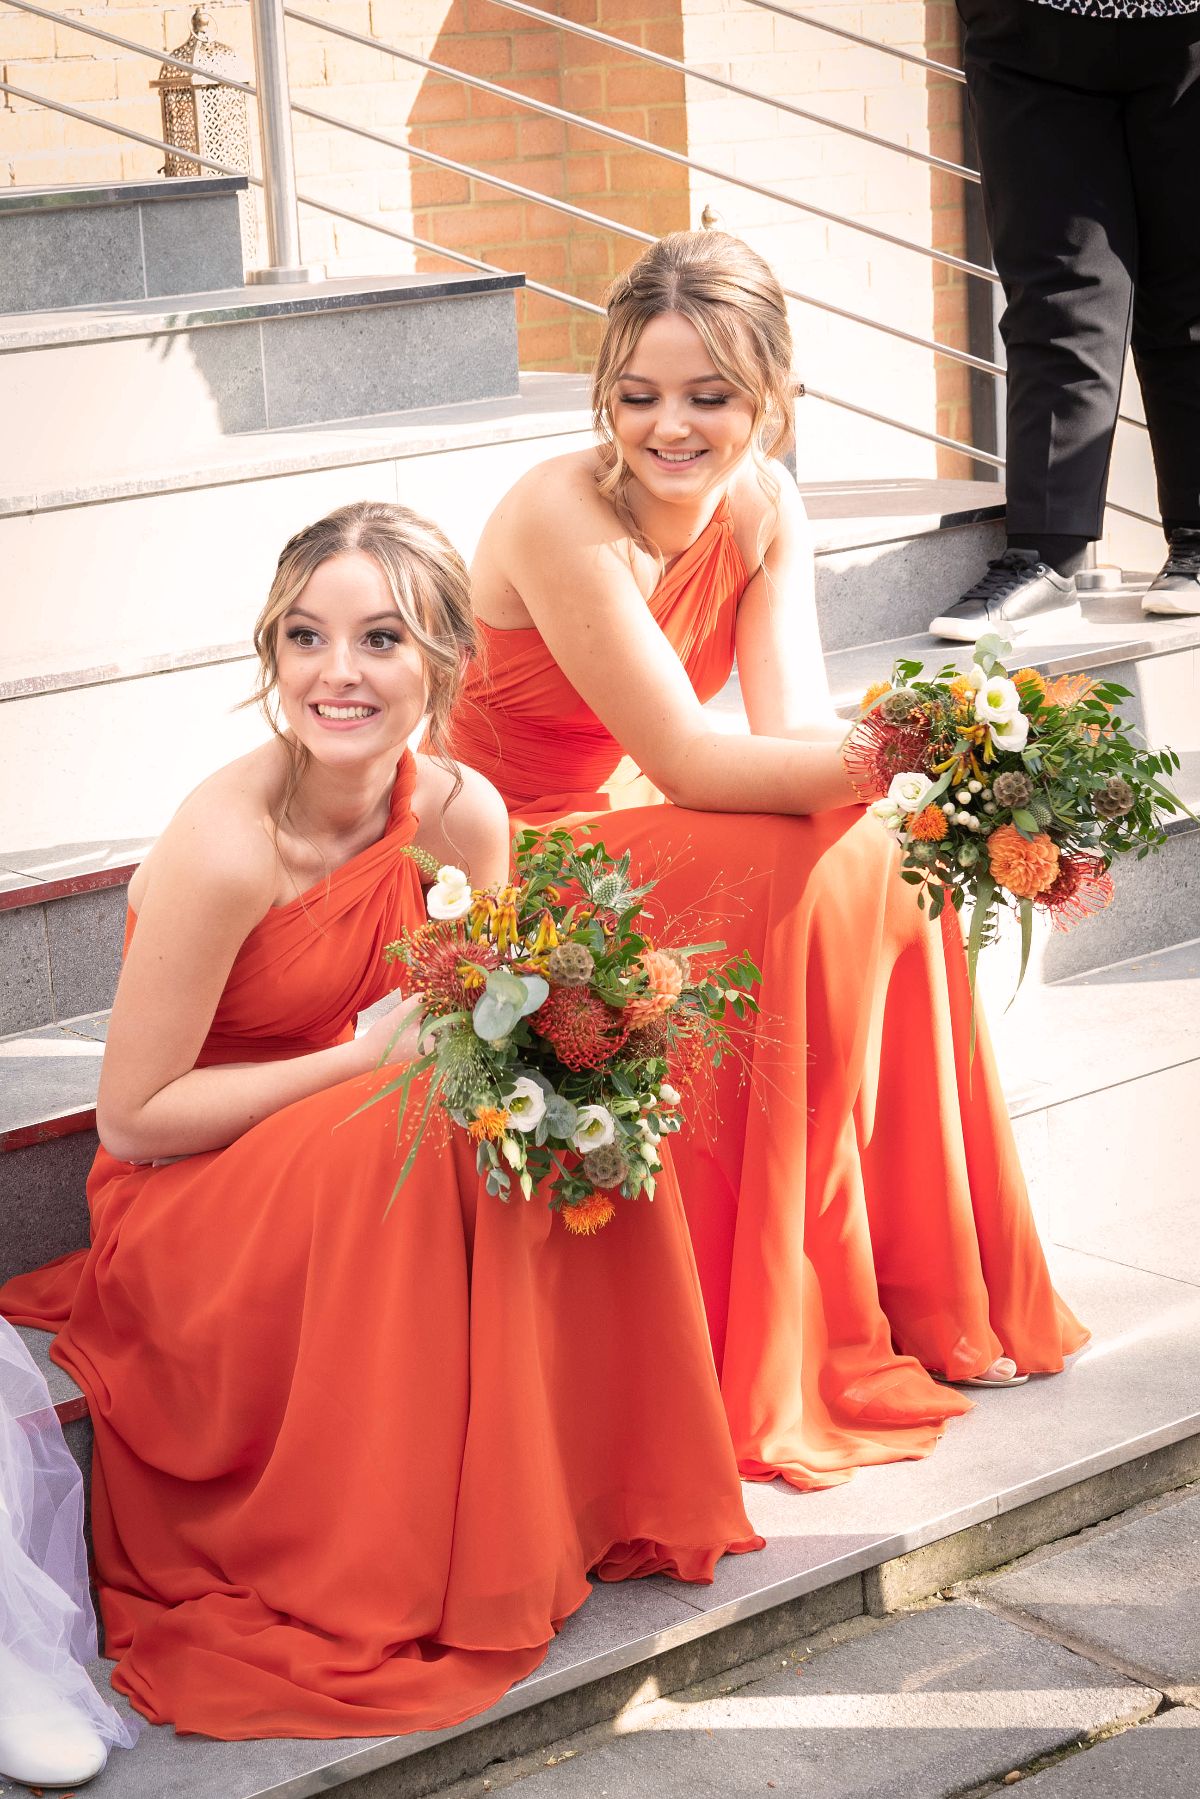 The beautiful bridesmaids